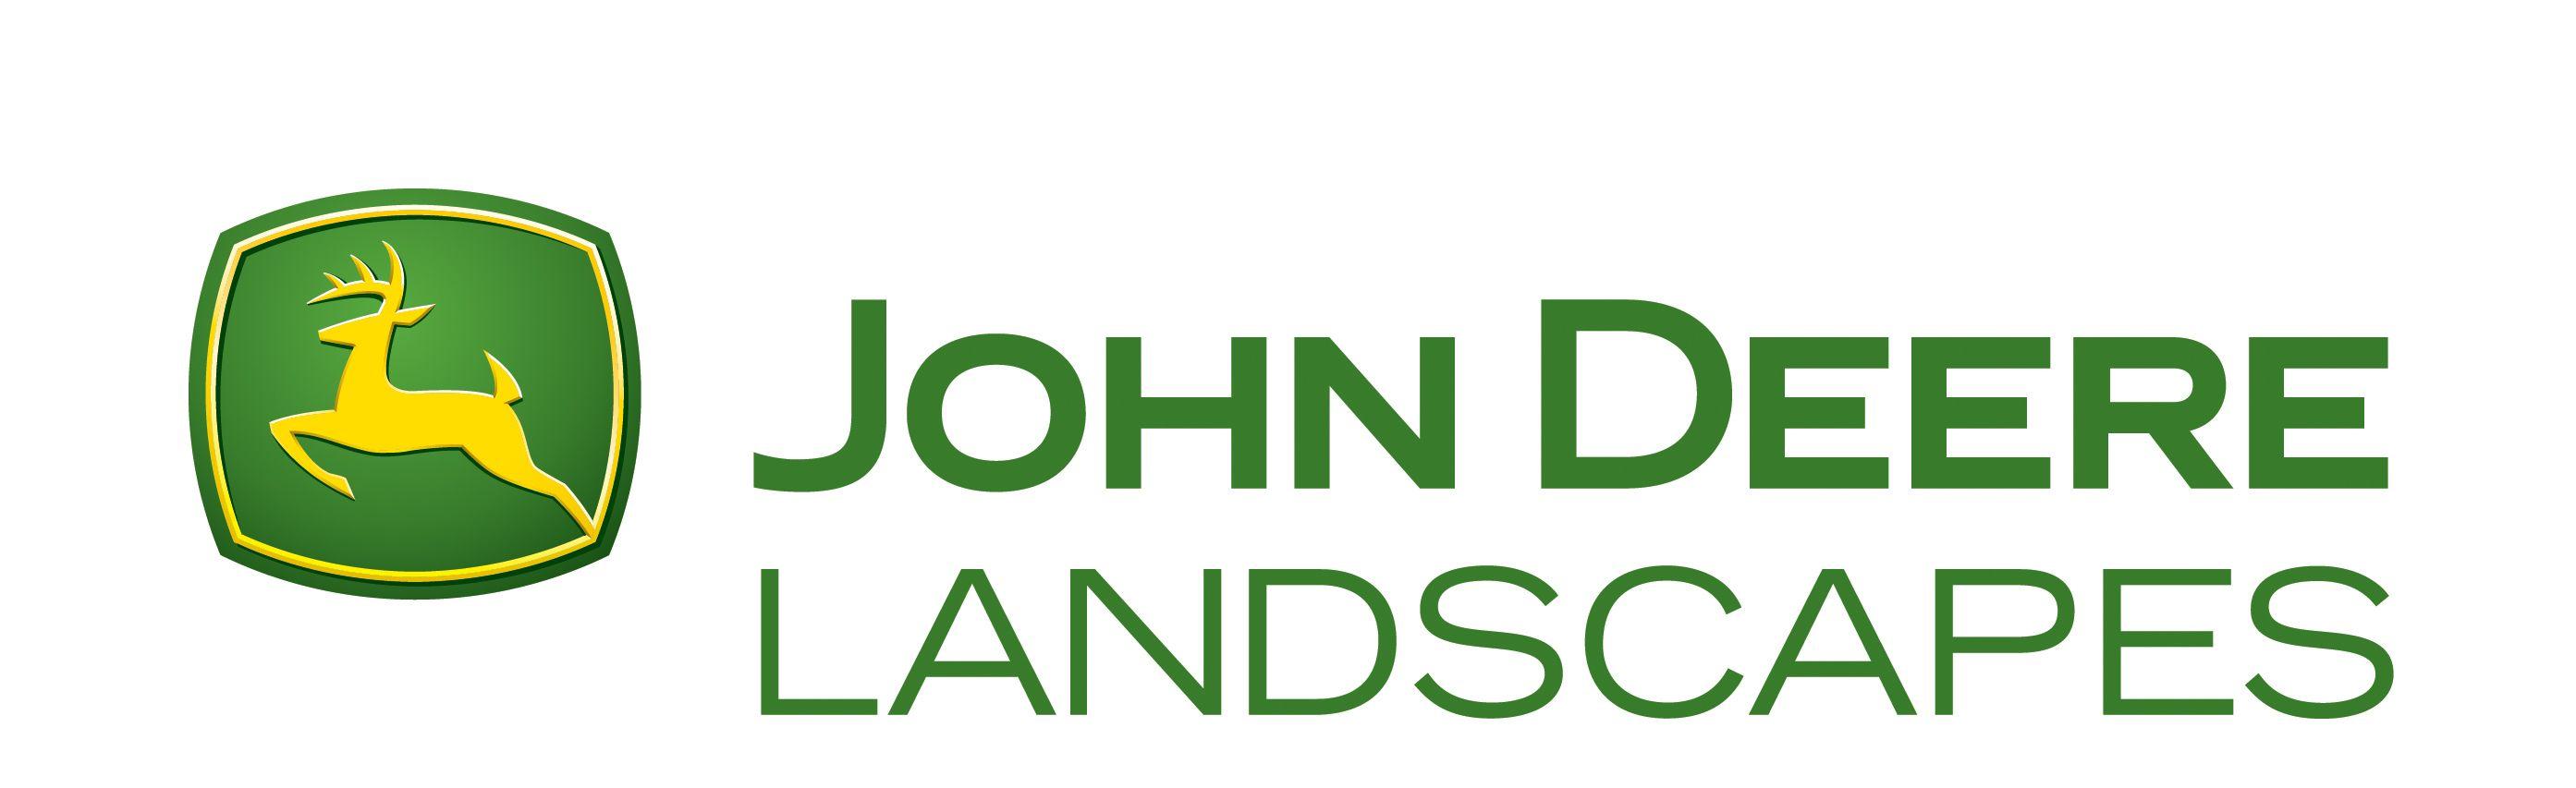 Small John Deere Logo - John Deere Landscapes Unveils New Name as SiteOne Landscape Supply ...